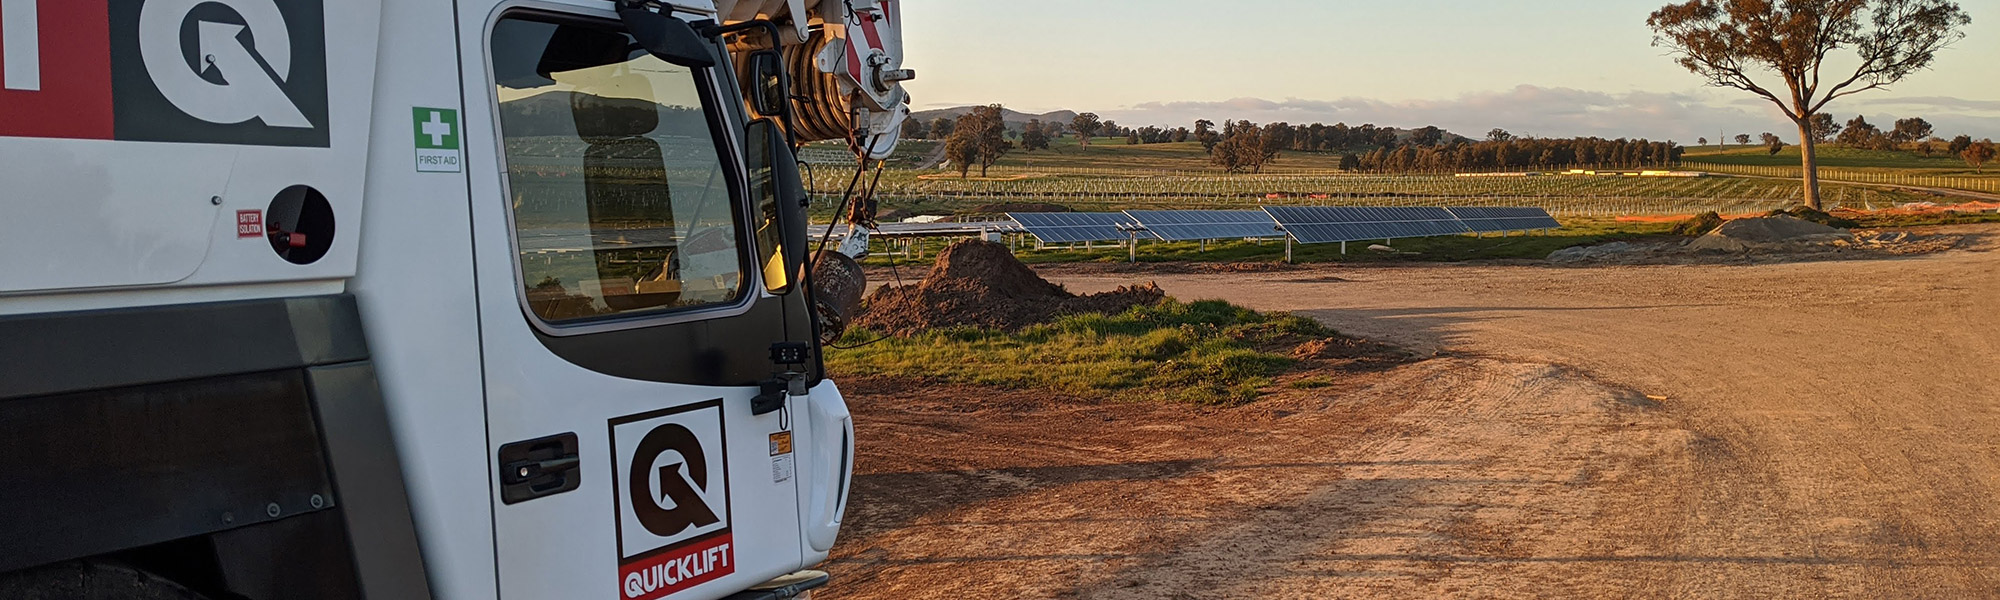 Solar Farms Quicklift 6